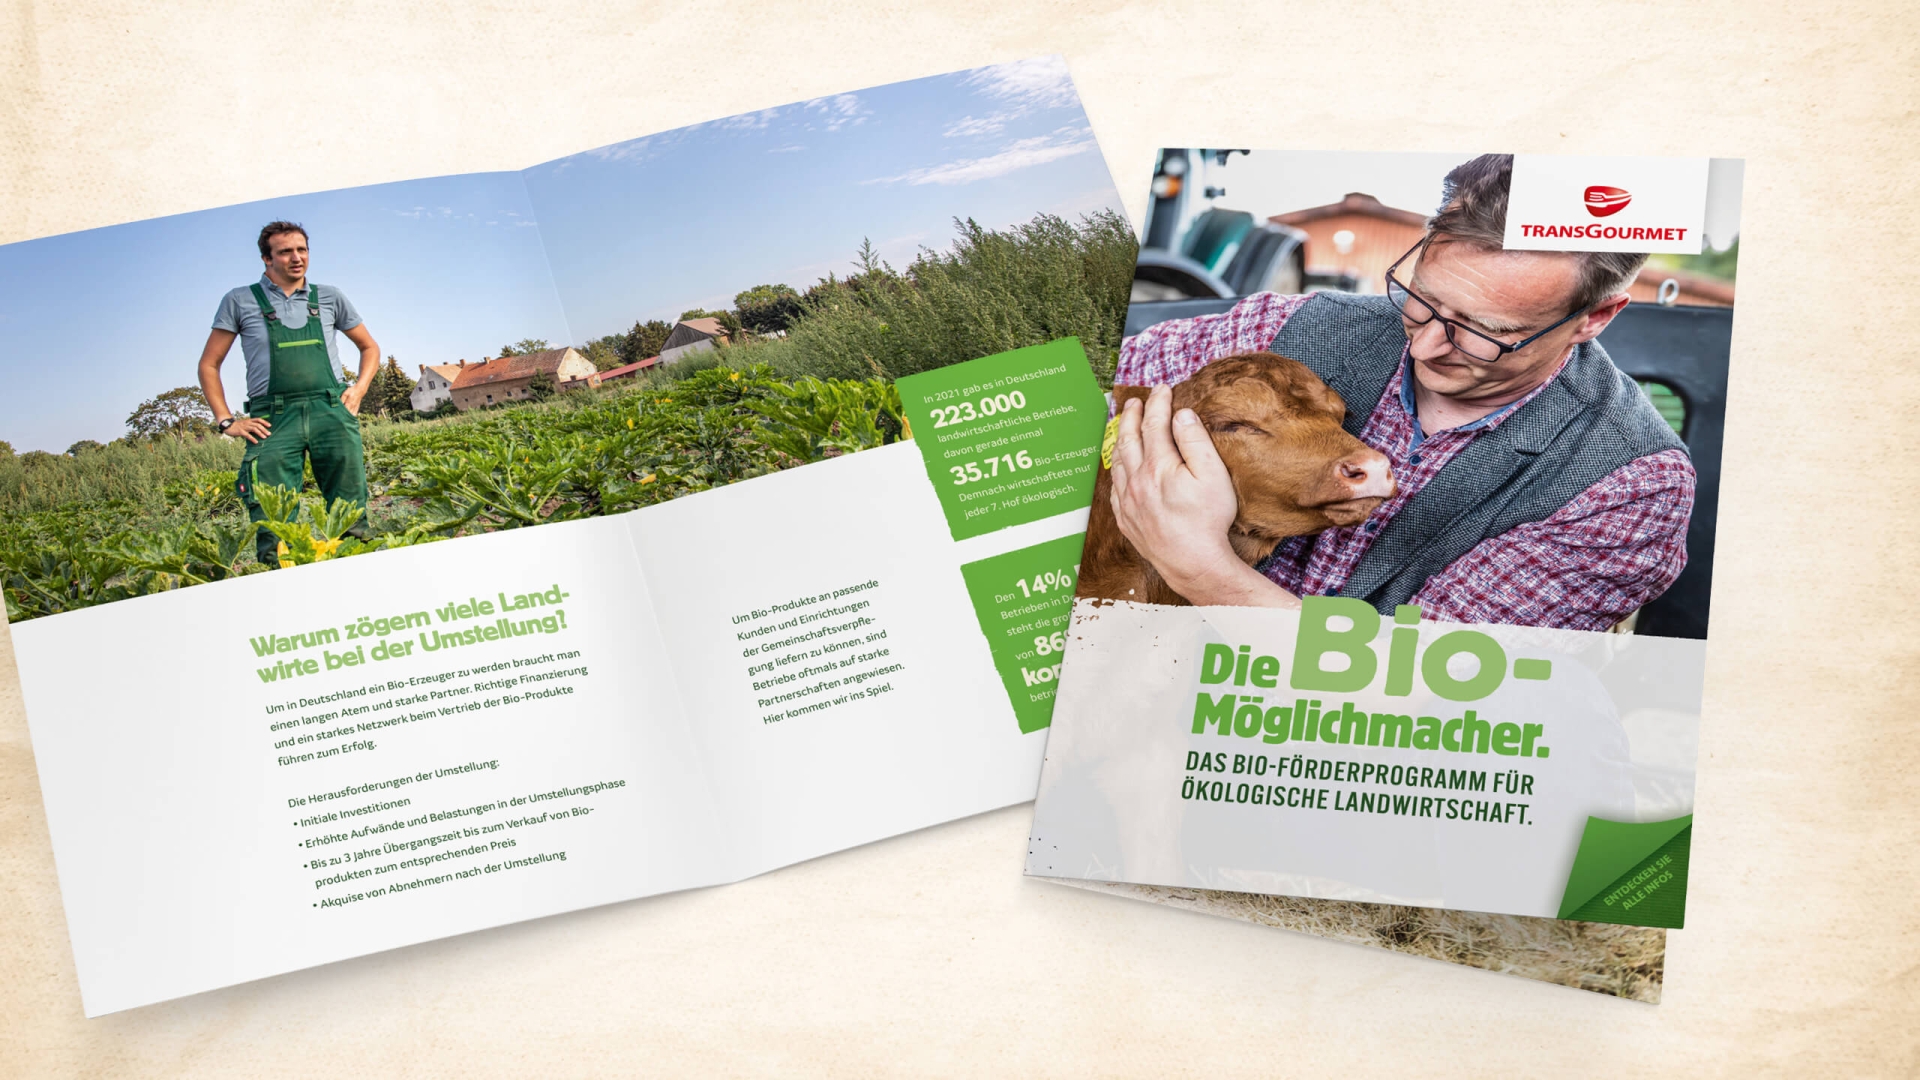 Transgourmet organic leaflet